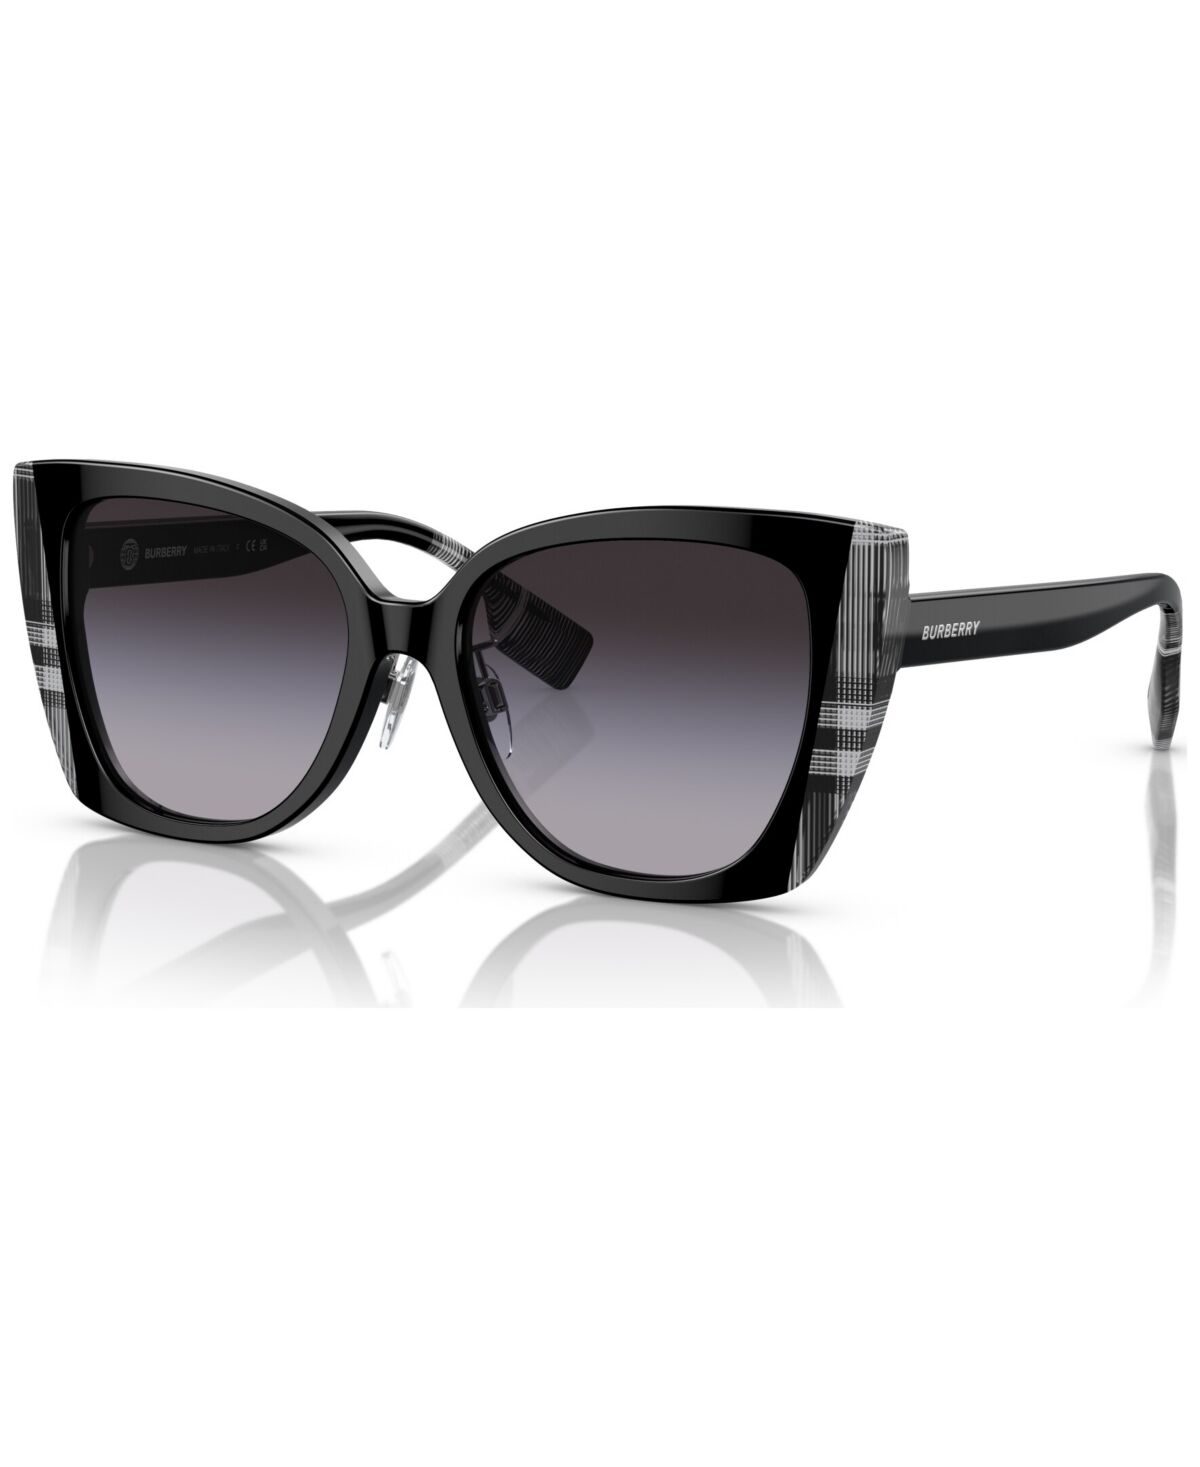 Burberry Women's Low Bridge Fit Sunglasses, Meryl - Black, Check White Black